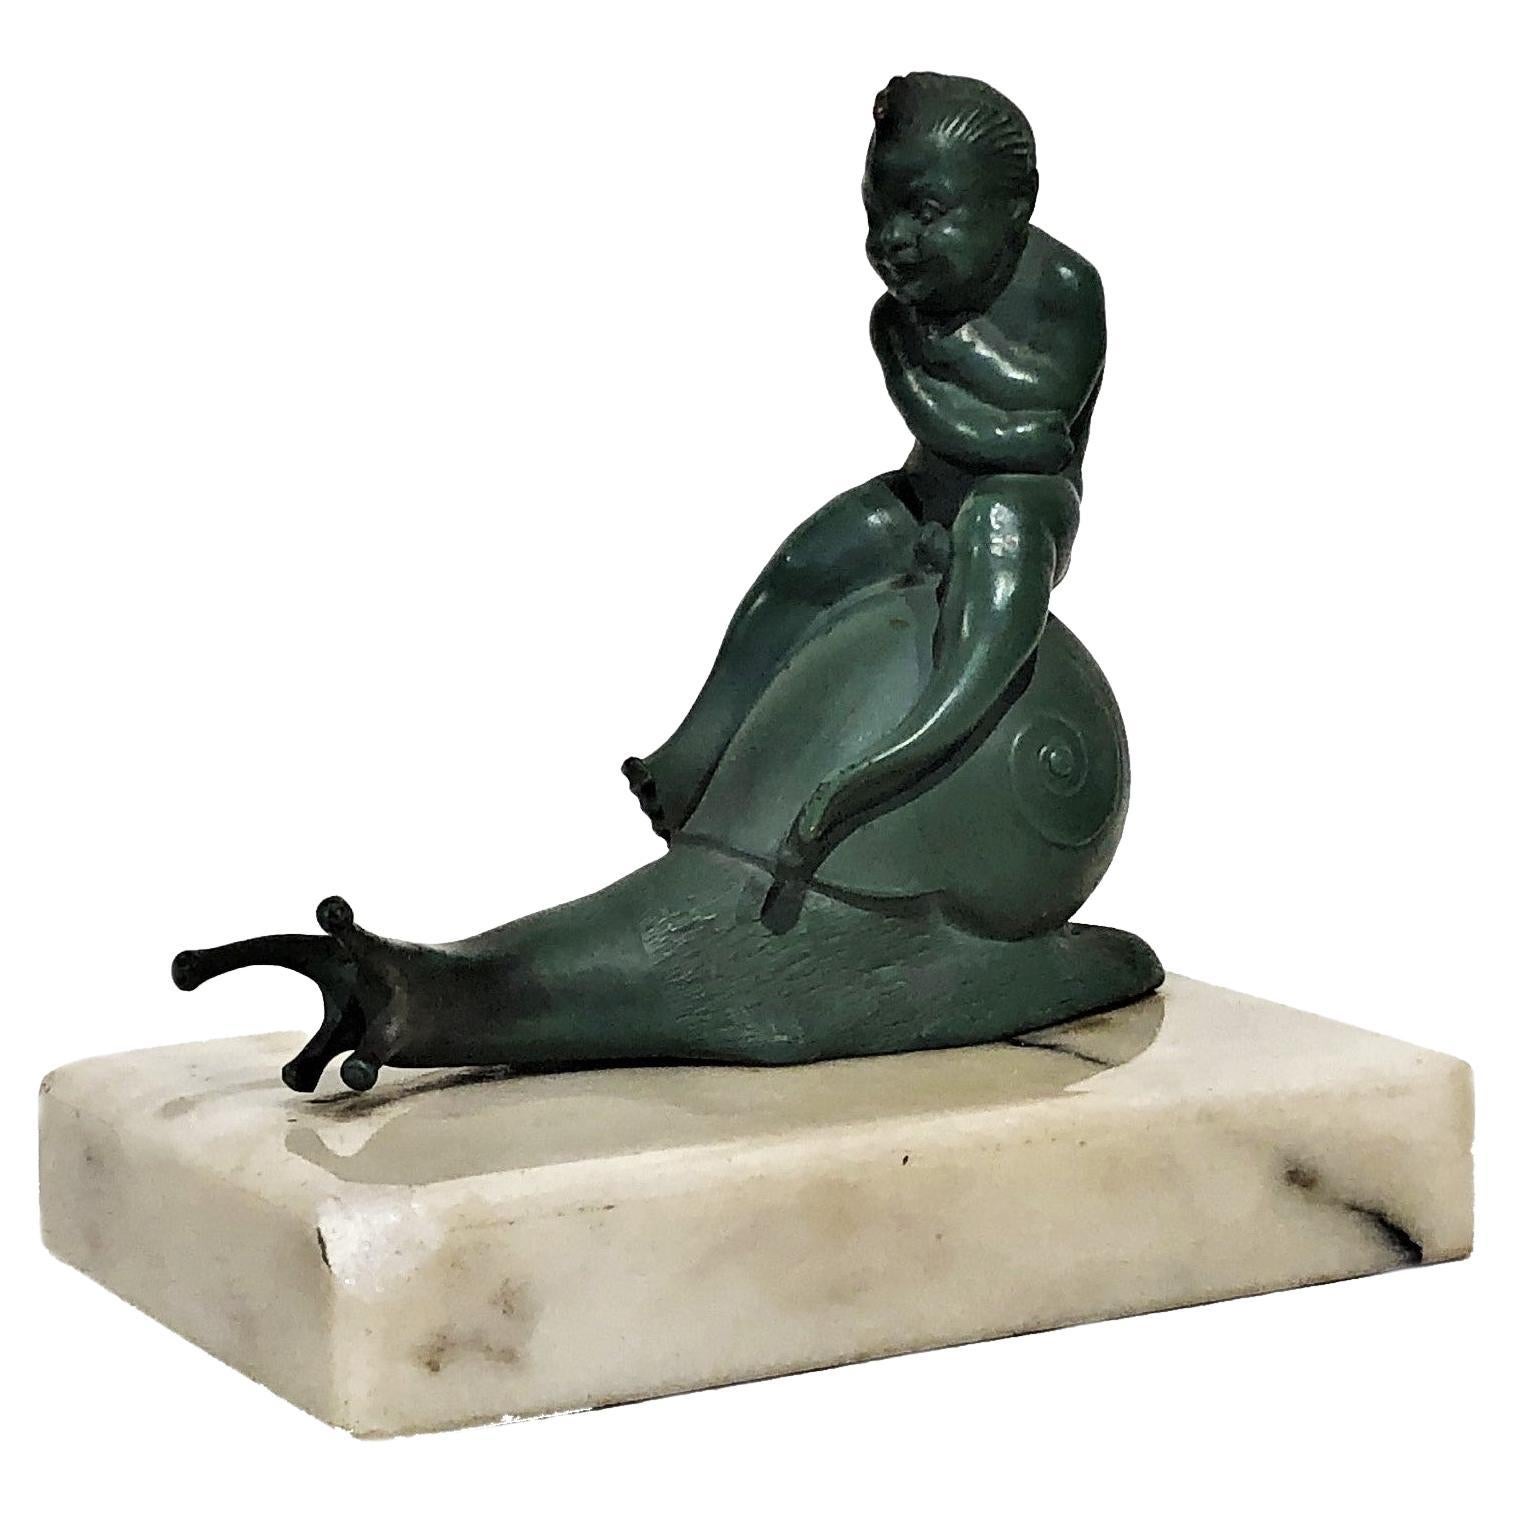 Presse-papier sculptural autrichien Jugendstil Vienna Bronze de Carl Fiala, vers 1910